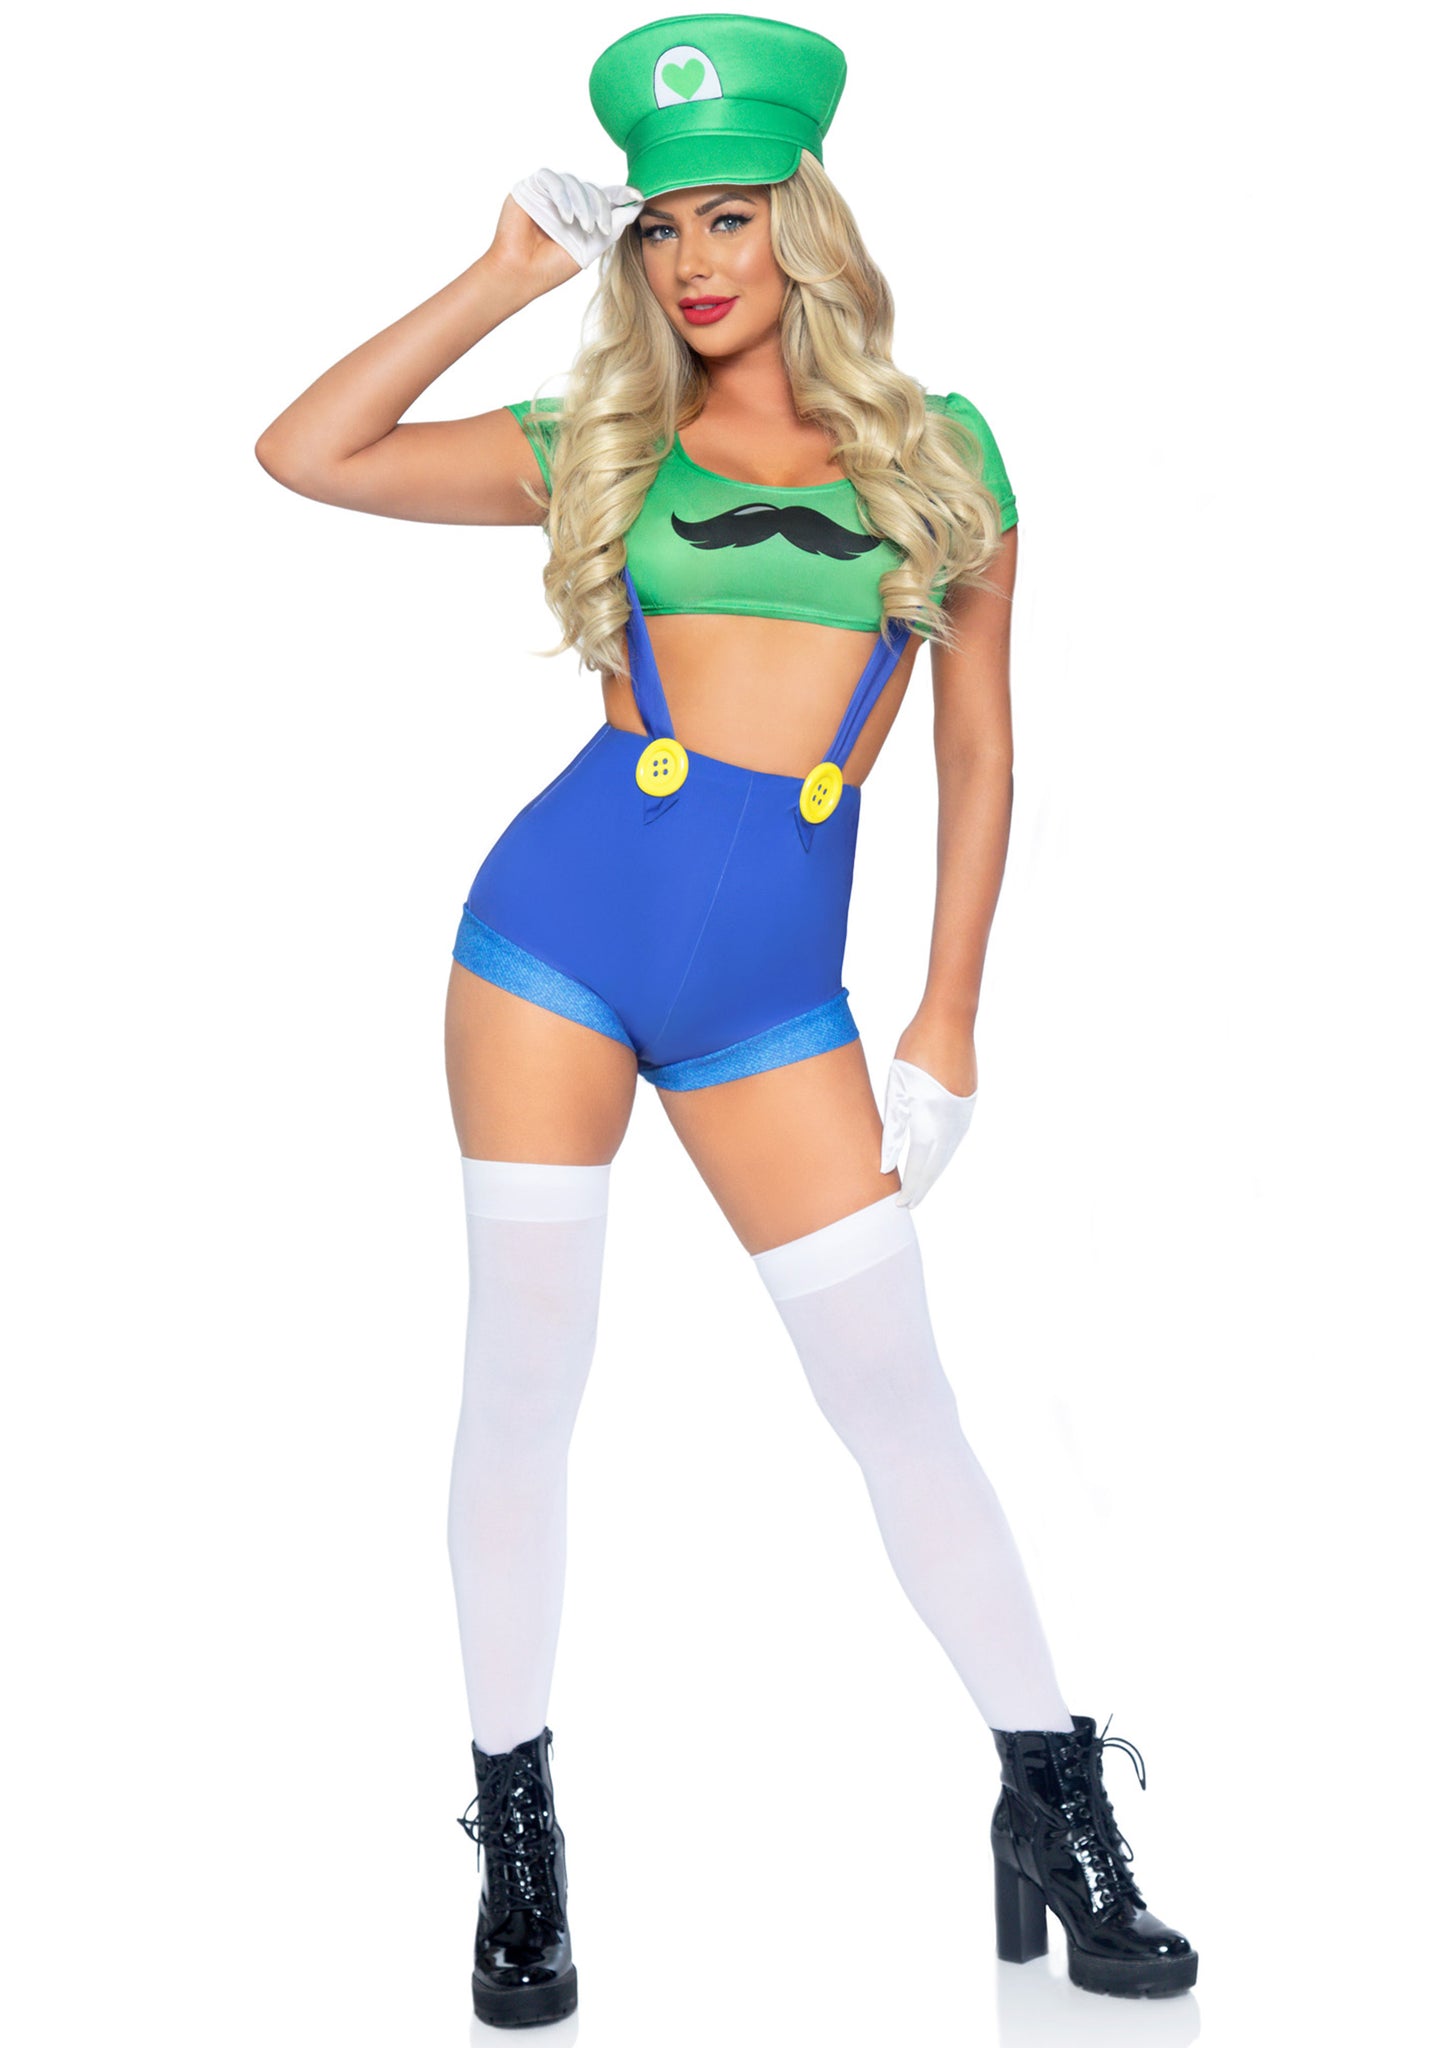 Gamer Sidekick Halloween Costume - Green/Blue